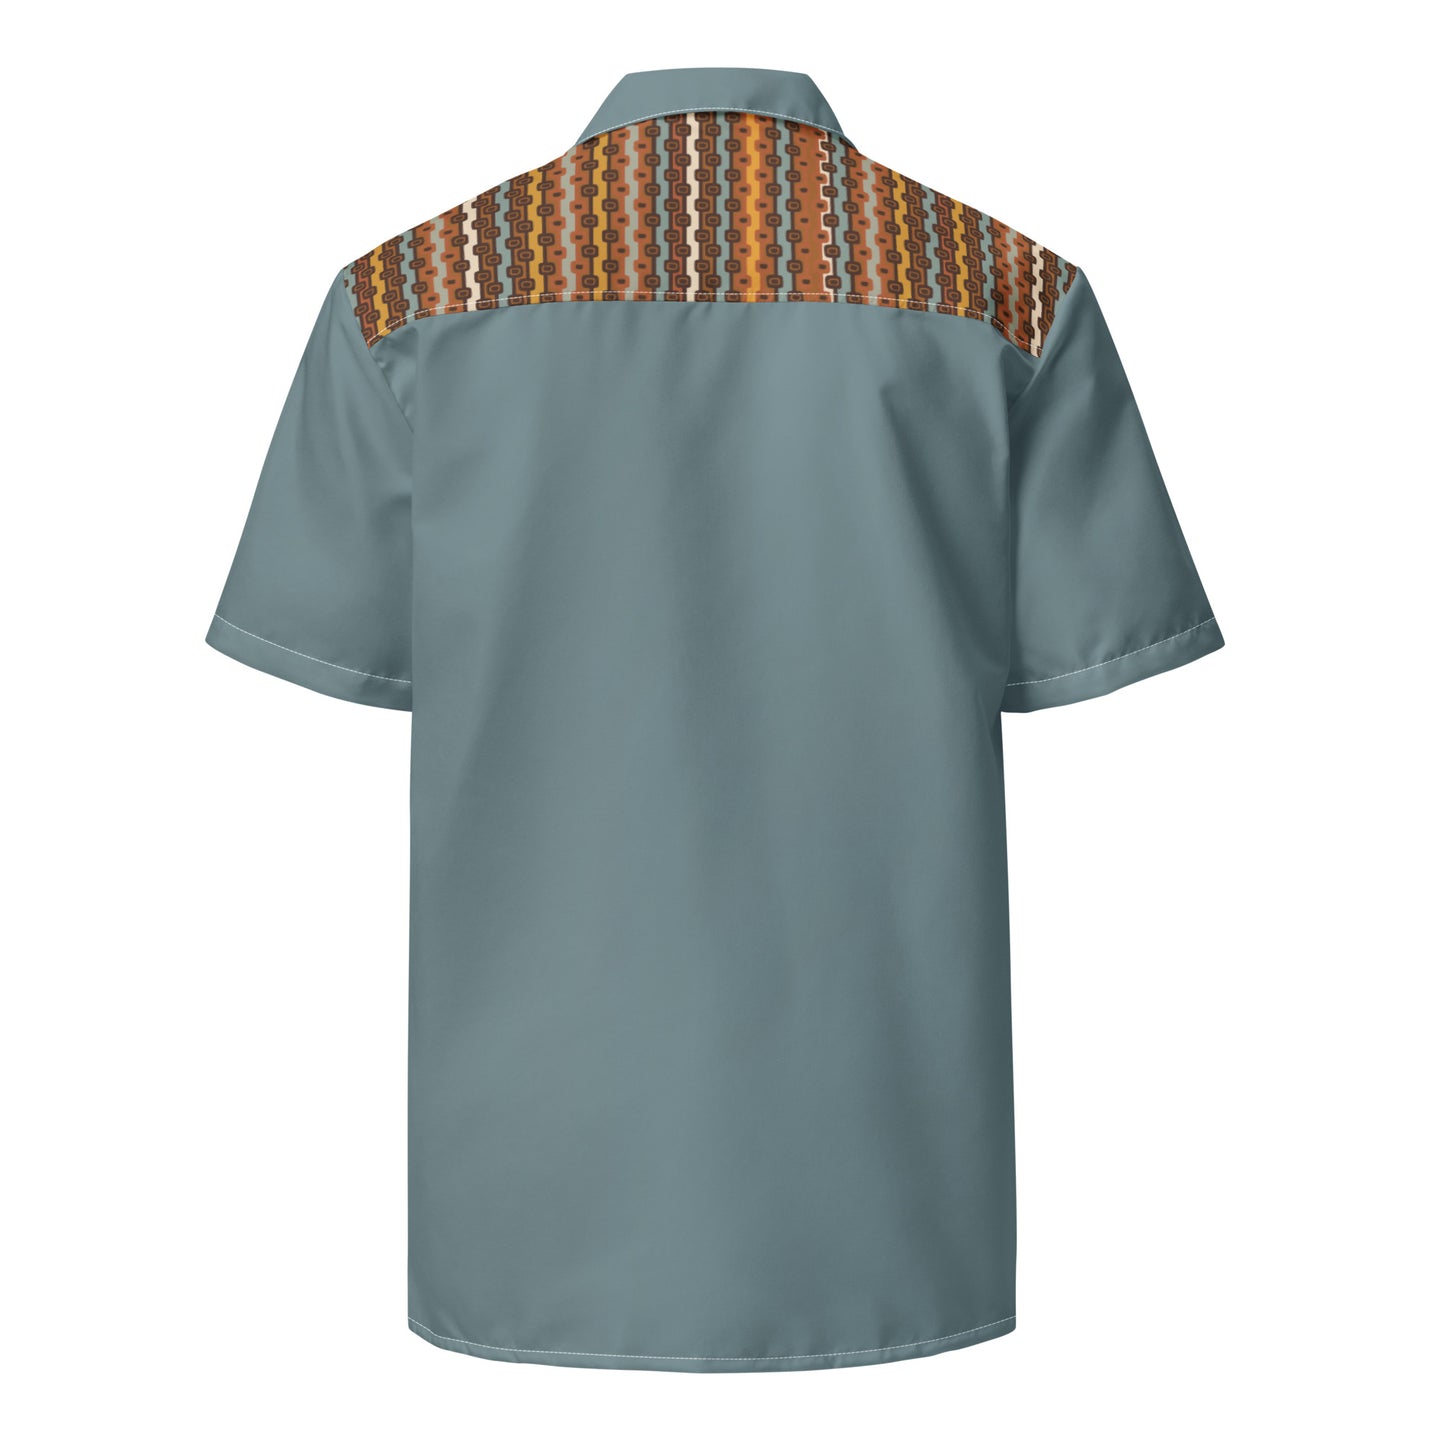 Retro Stripes Unisex Button Sun Shirt